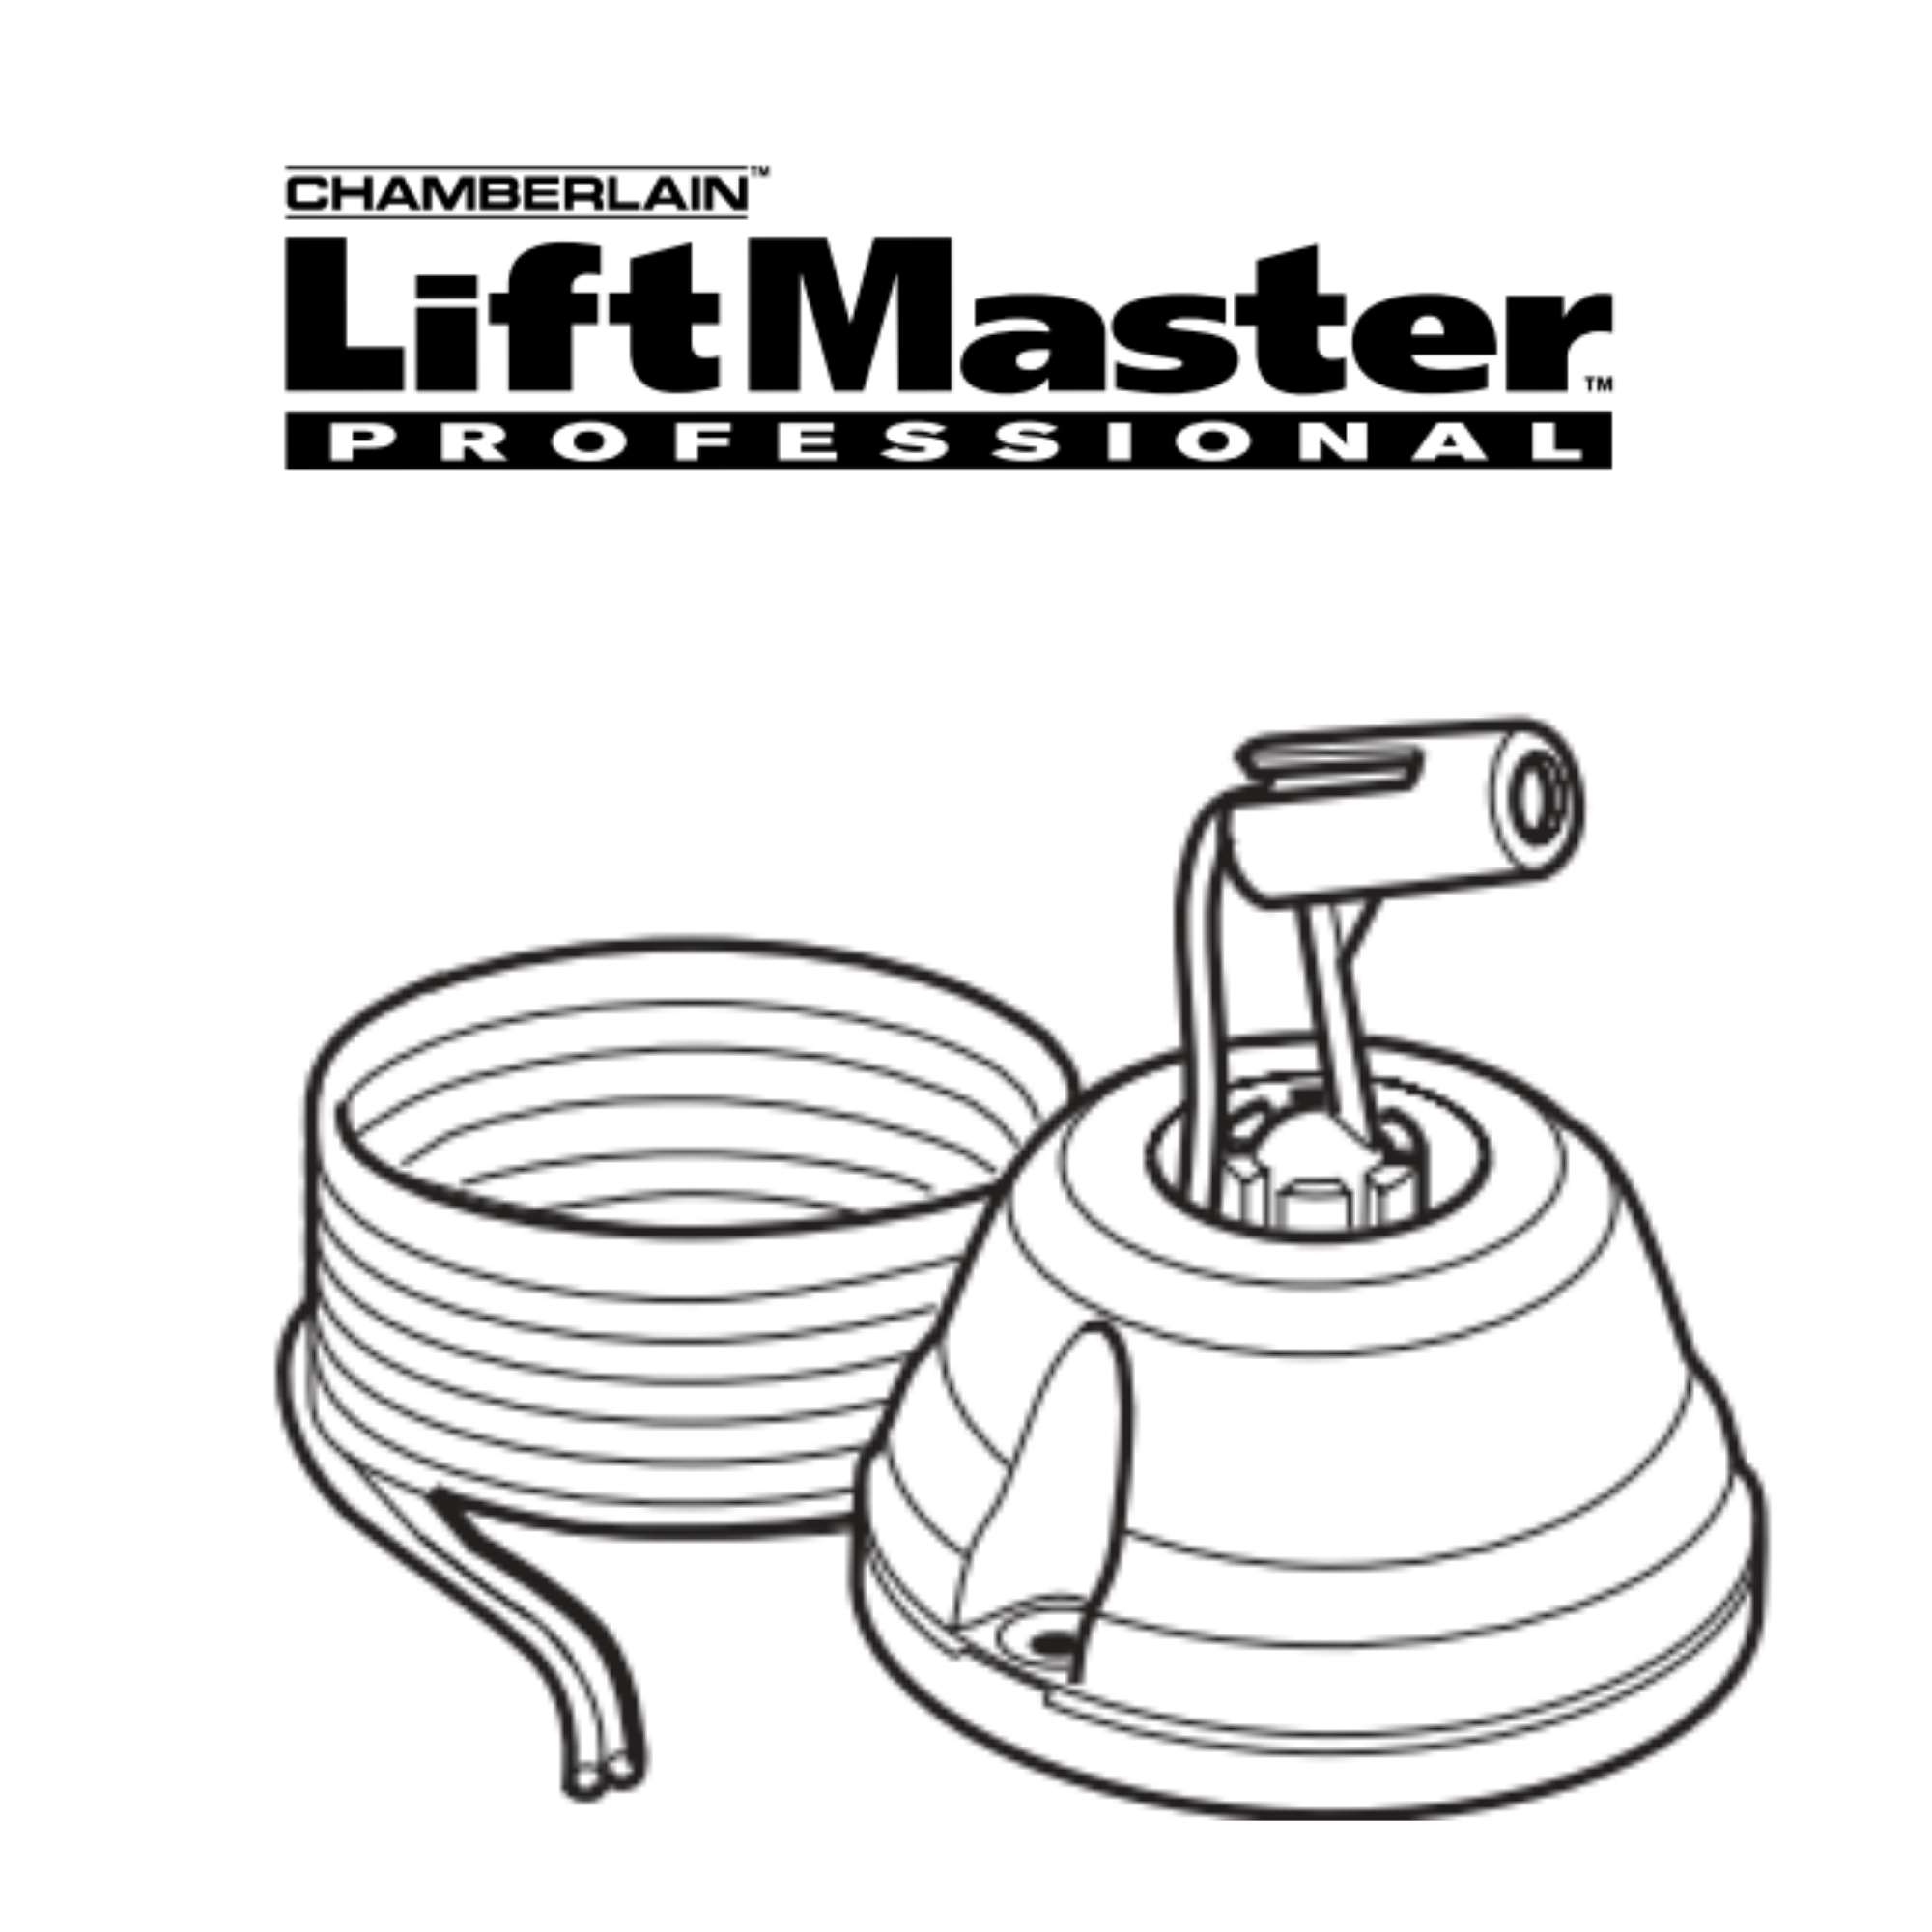 Liftmaster Laser Garage Parking Assistant – Model 975LM and 976LMC